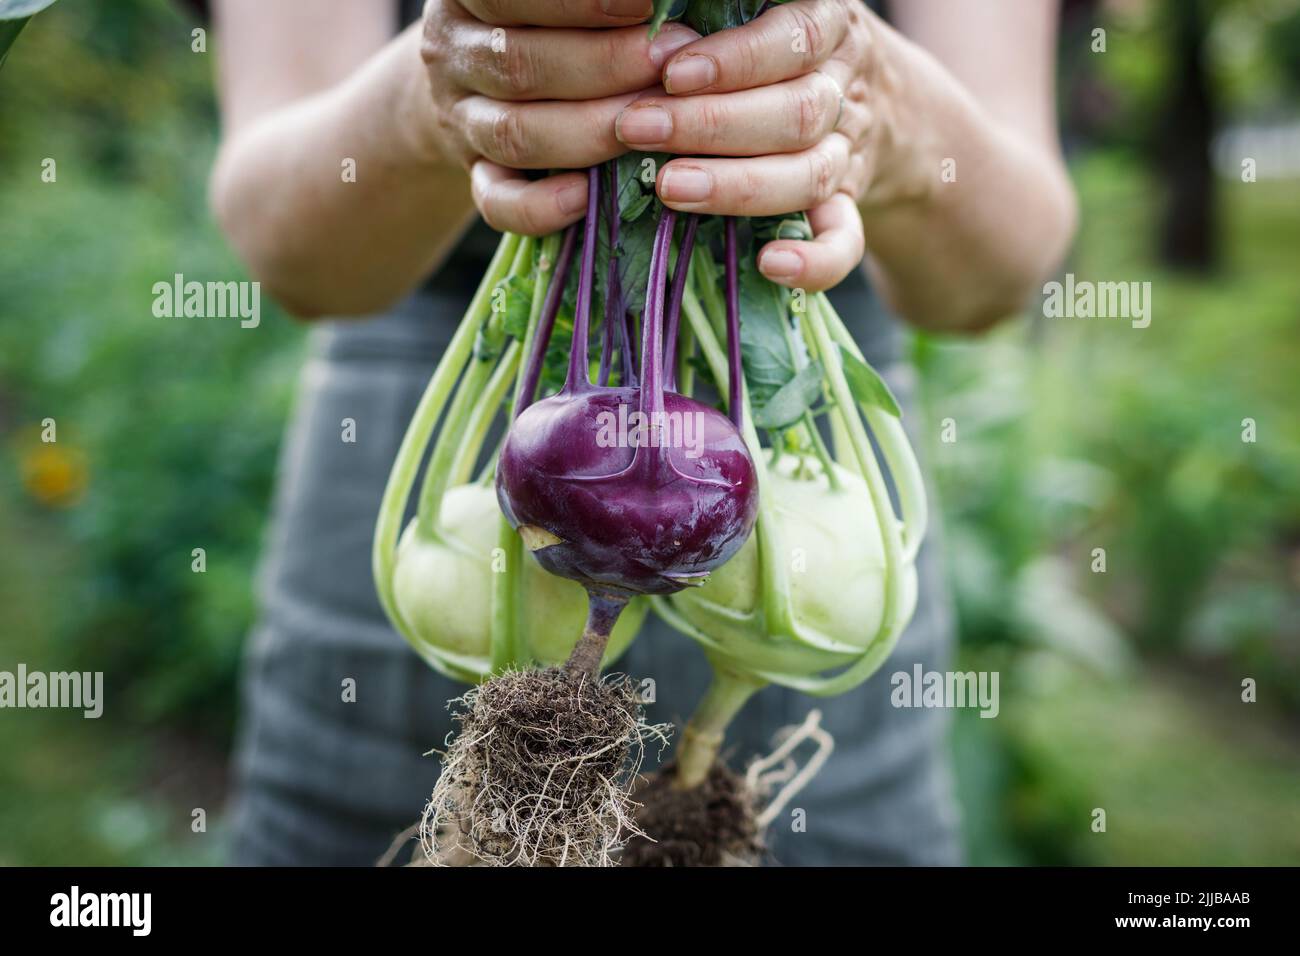 Kohlrabi in female hand. Woman harvesting ripe organic green and purple kohlrabi in vegetable garden Stock Photo